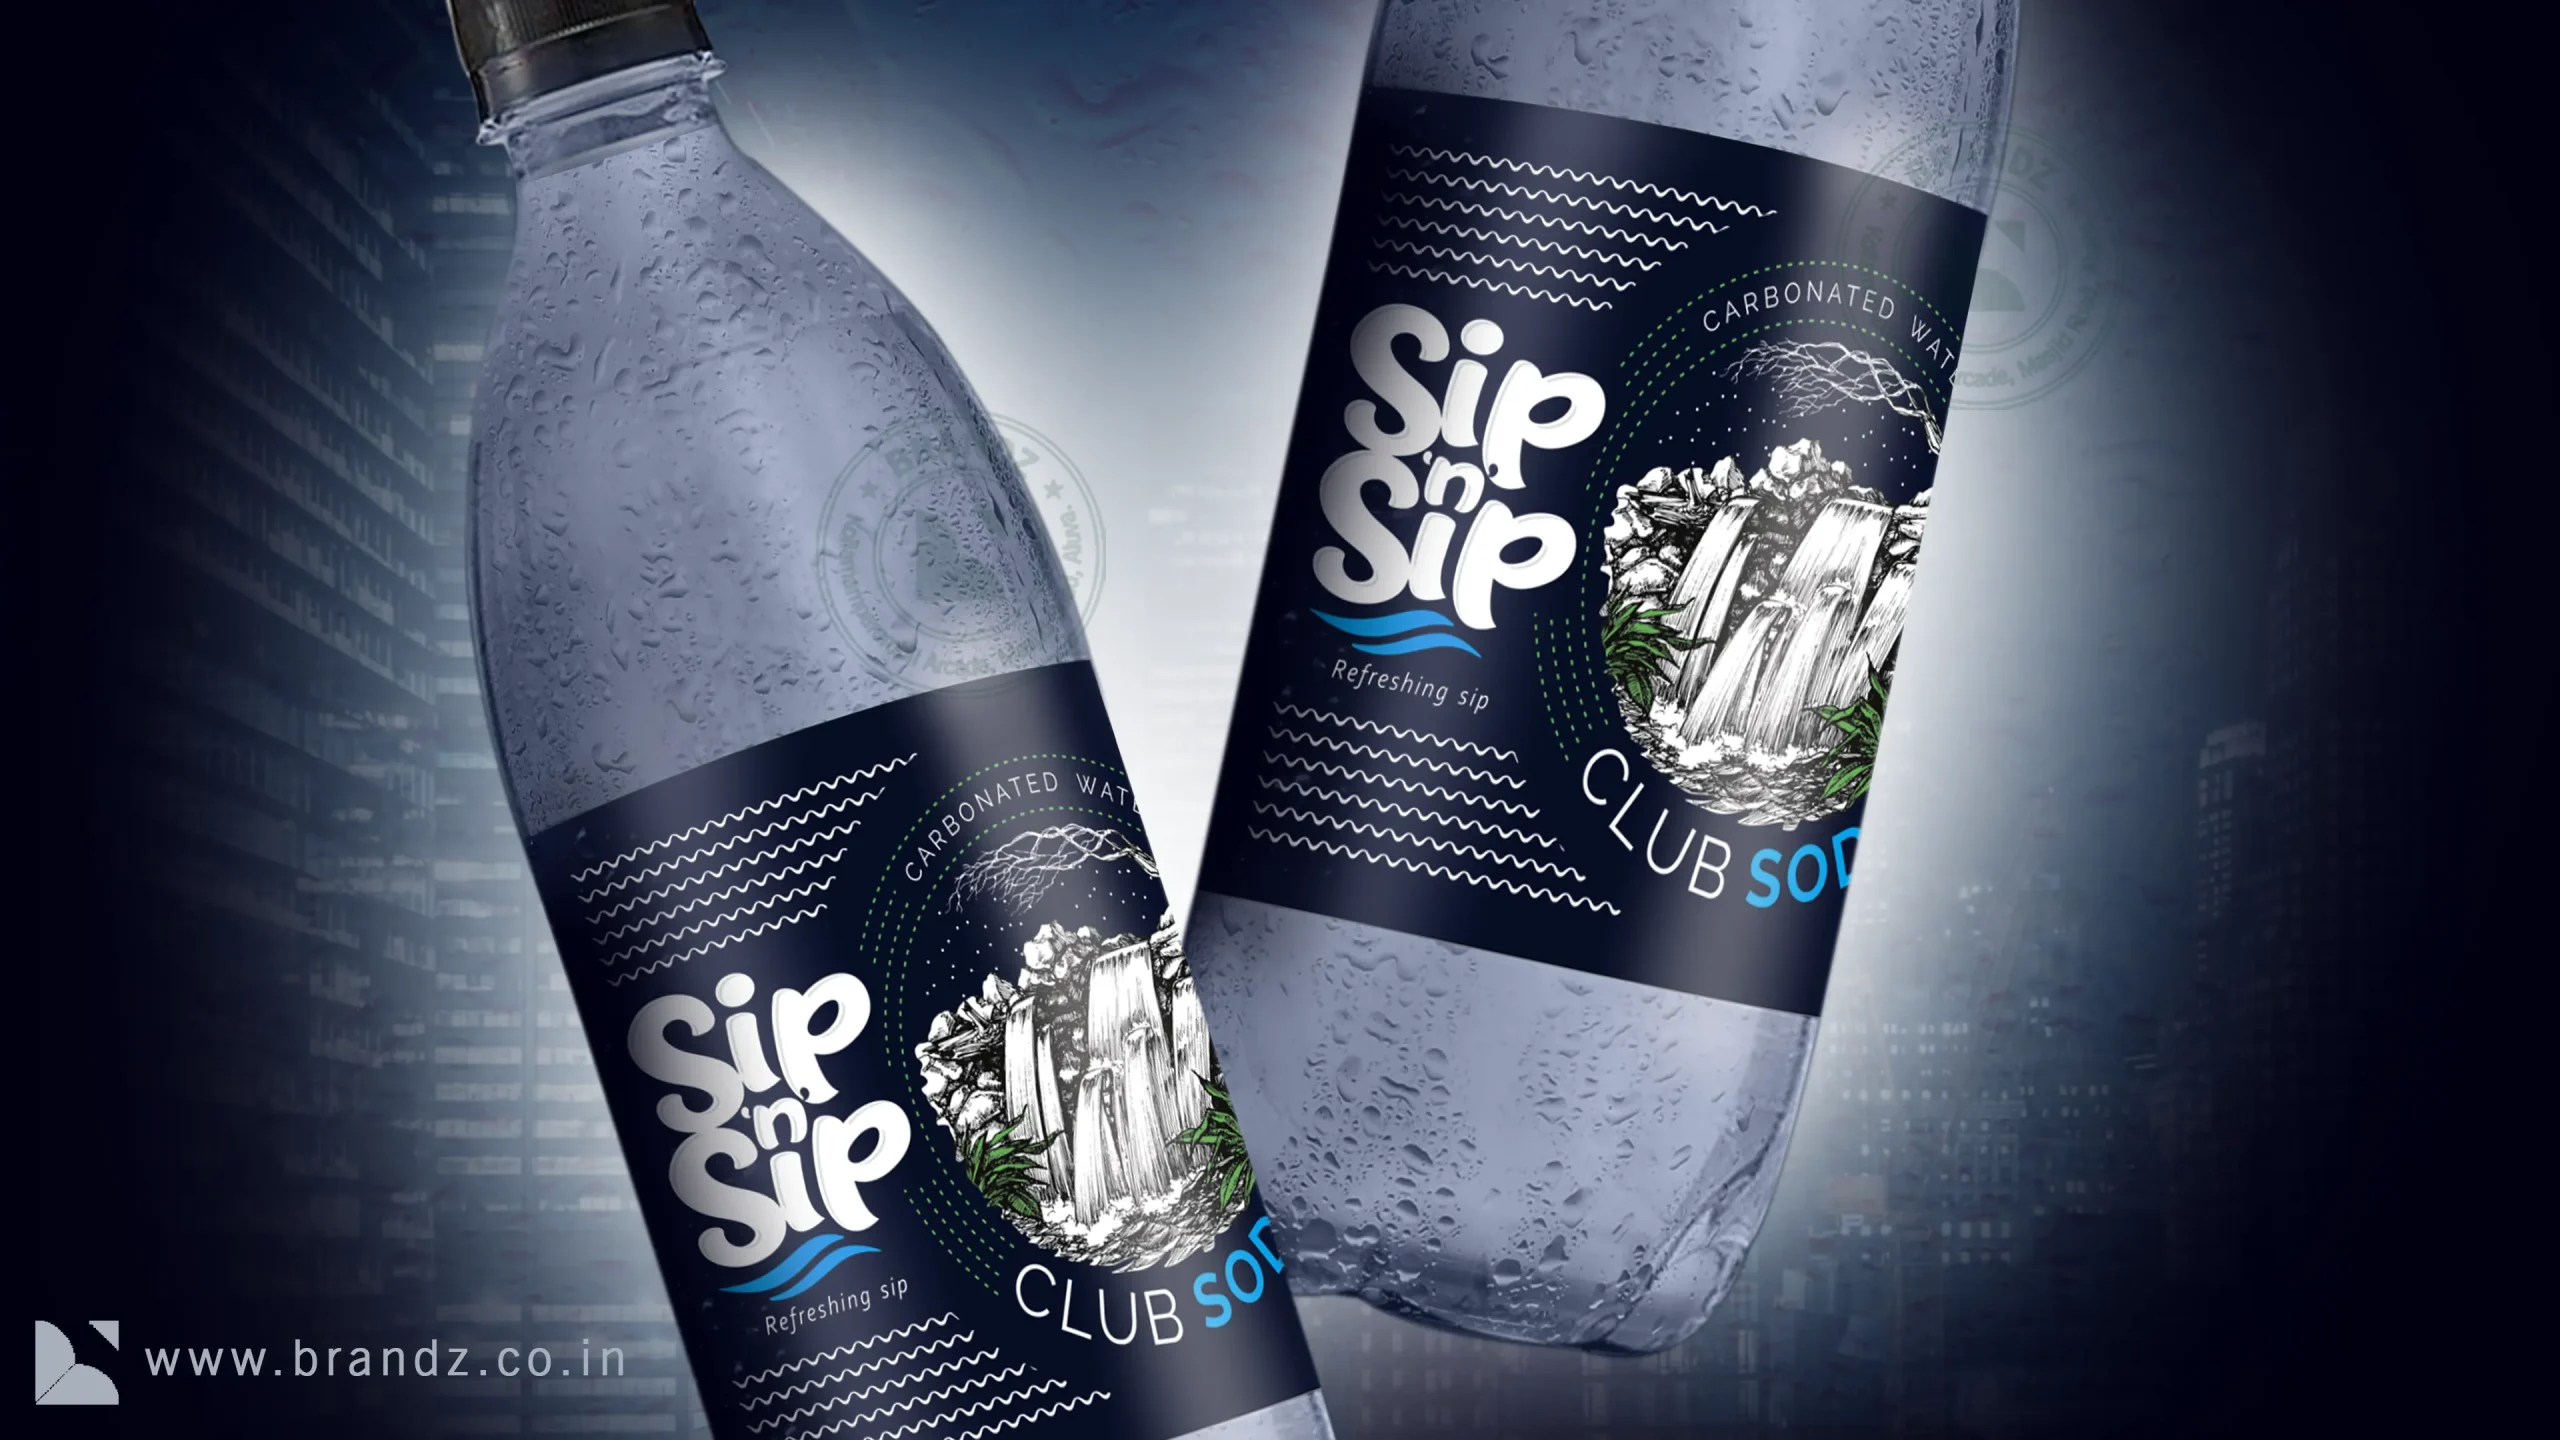 Sip N Sip Club Soda Label